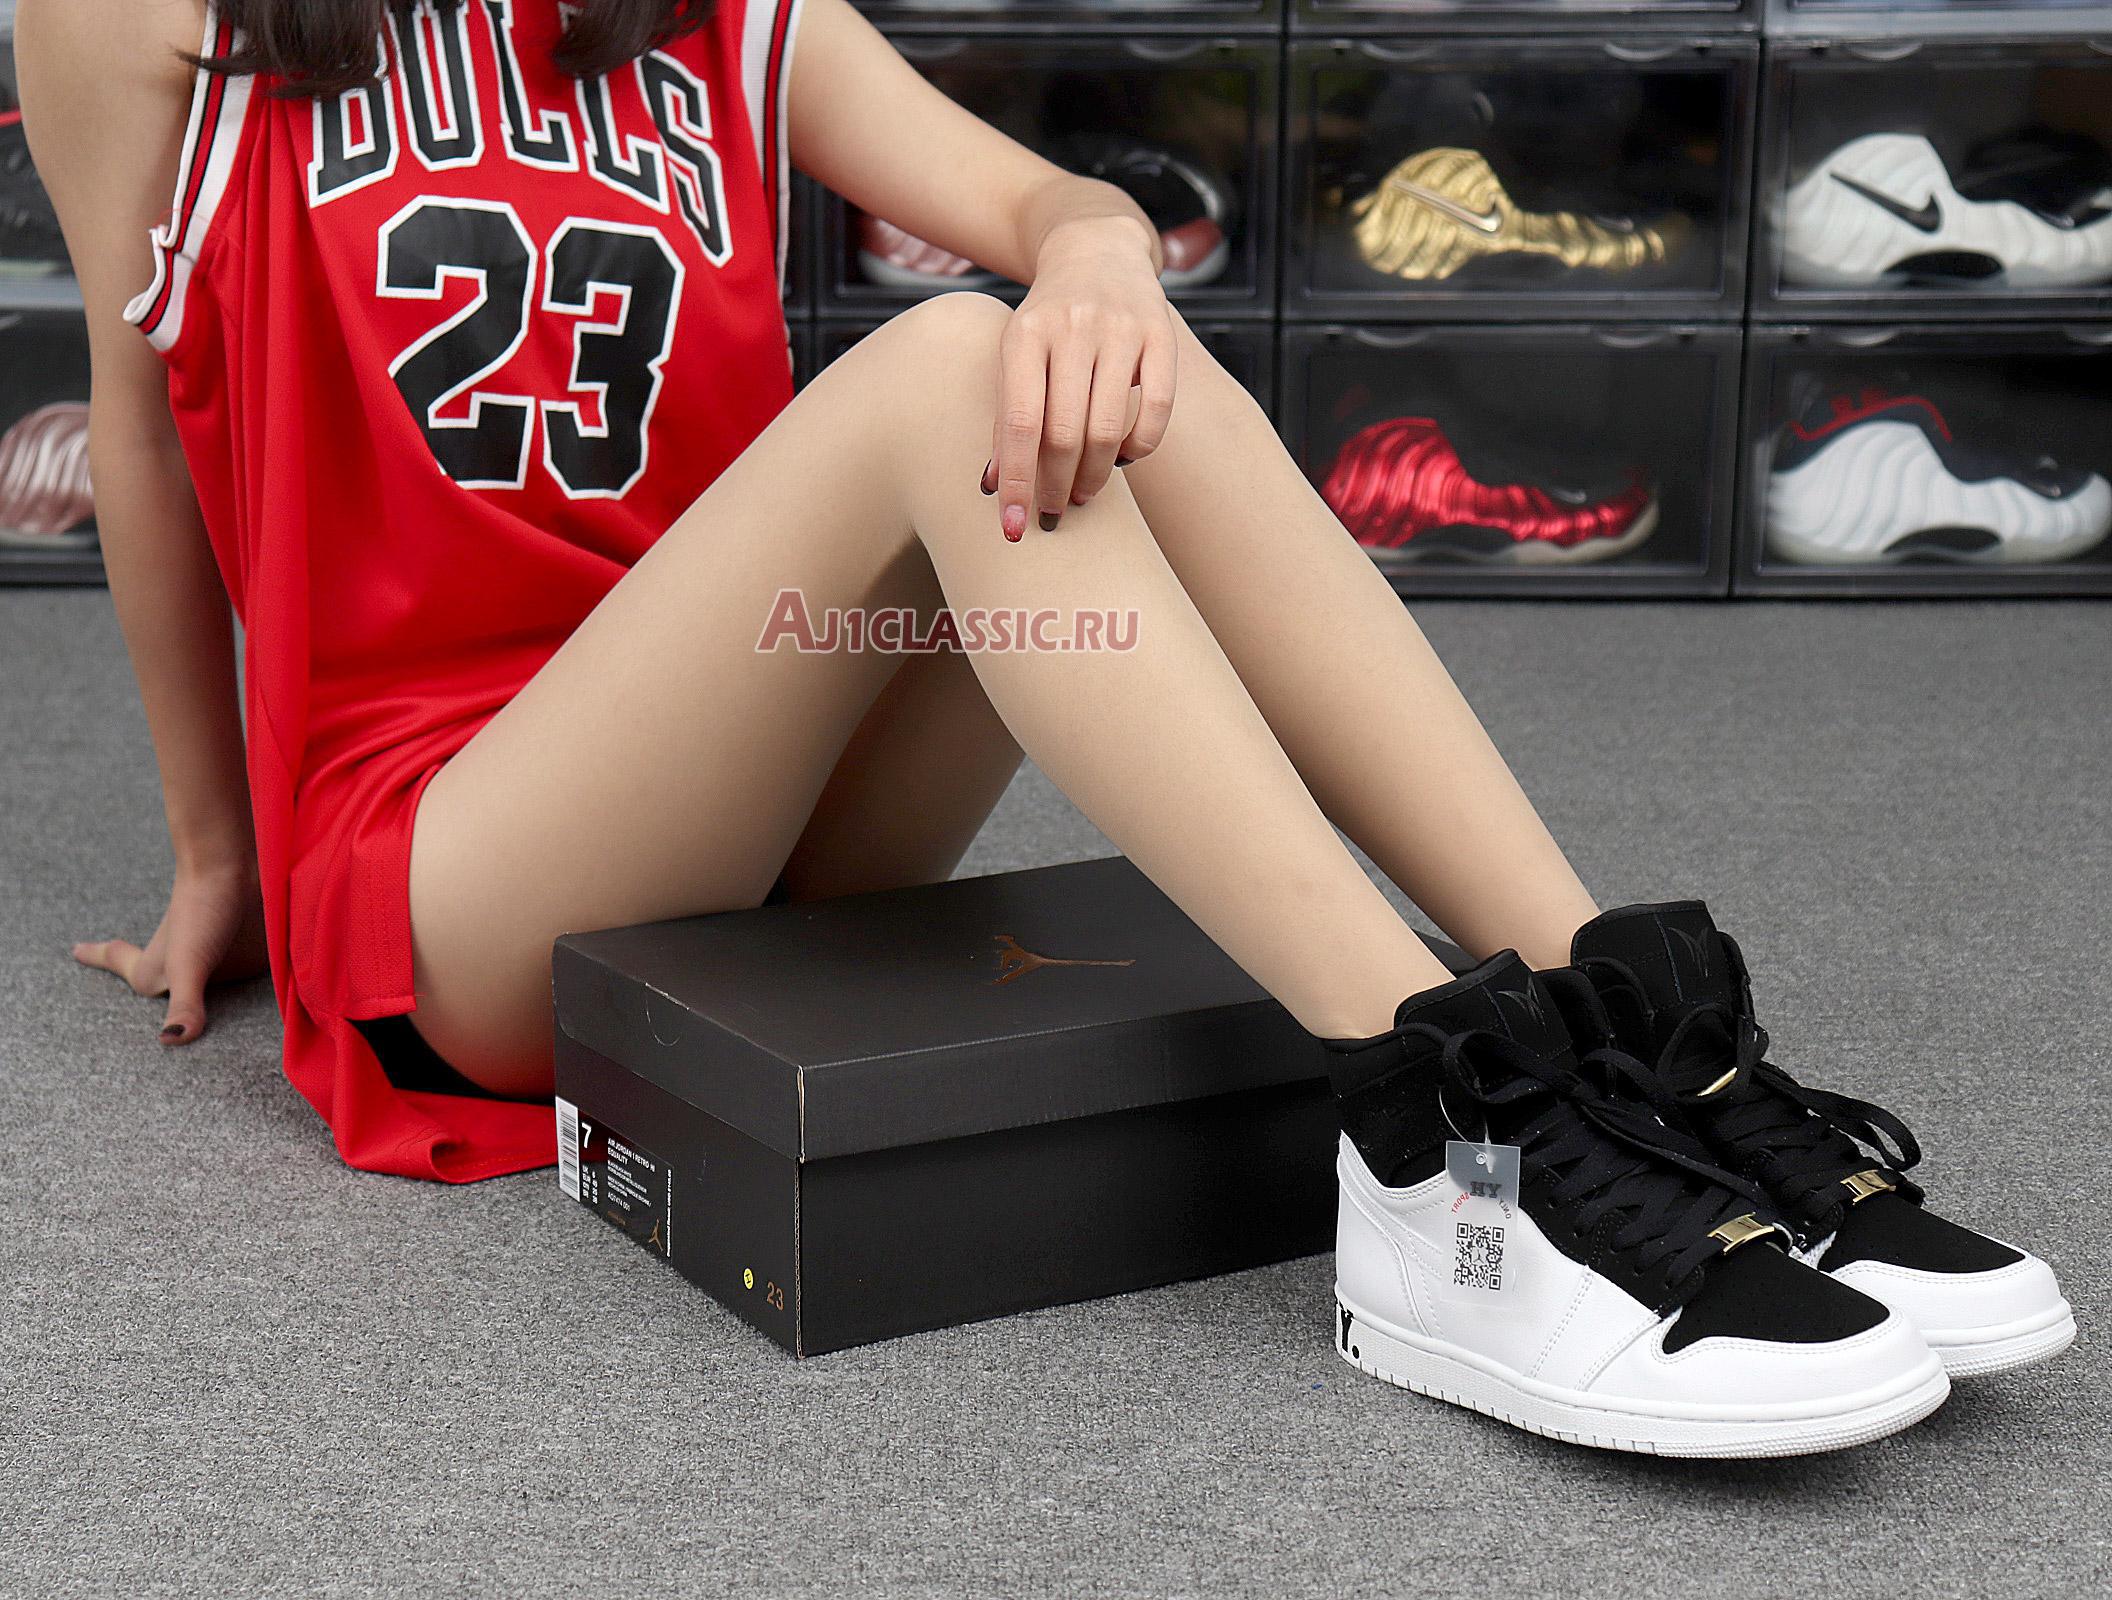 Air Jordan 1 Retro High Equality AQ7474-001 Black/Black-White-Metallic Gold Sneakers